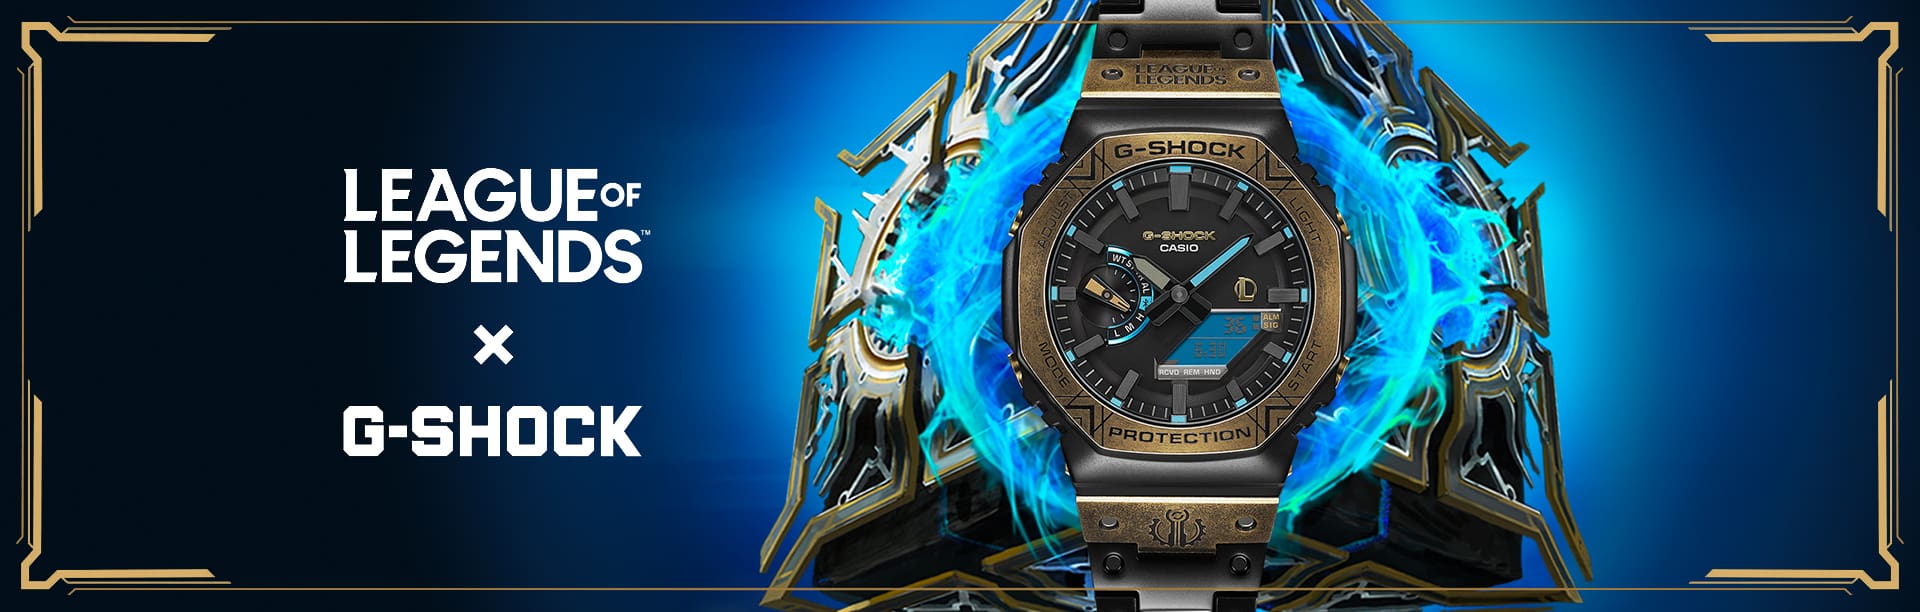 G-SHOCK League of Legends GM-B2100LL watch and artwork